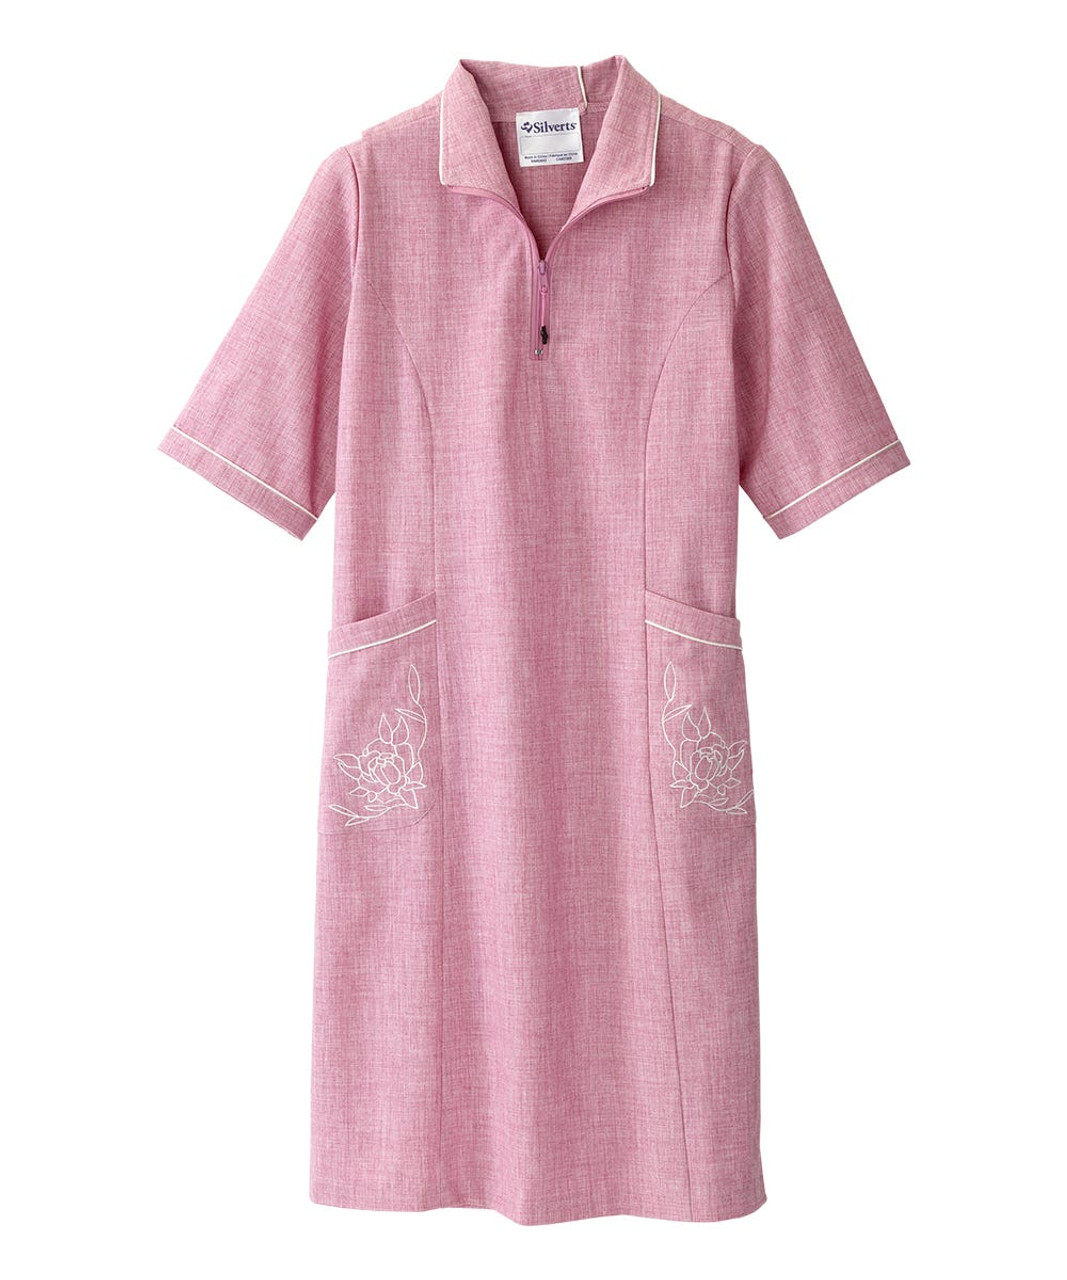 Silverts SV314 Senior Women's Adaptive Open Back Embroidered Linen Dress Dusty Pink, Size=XL, SV314-SV2004-XL